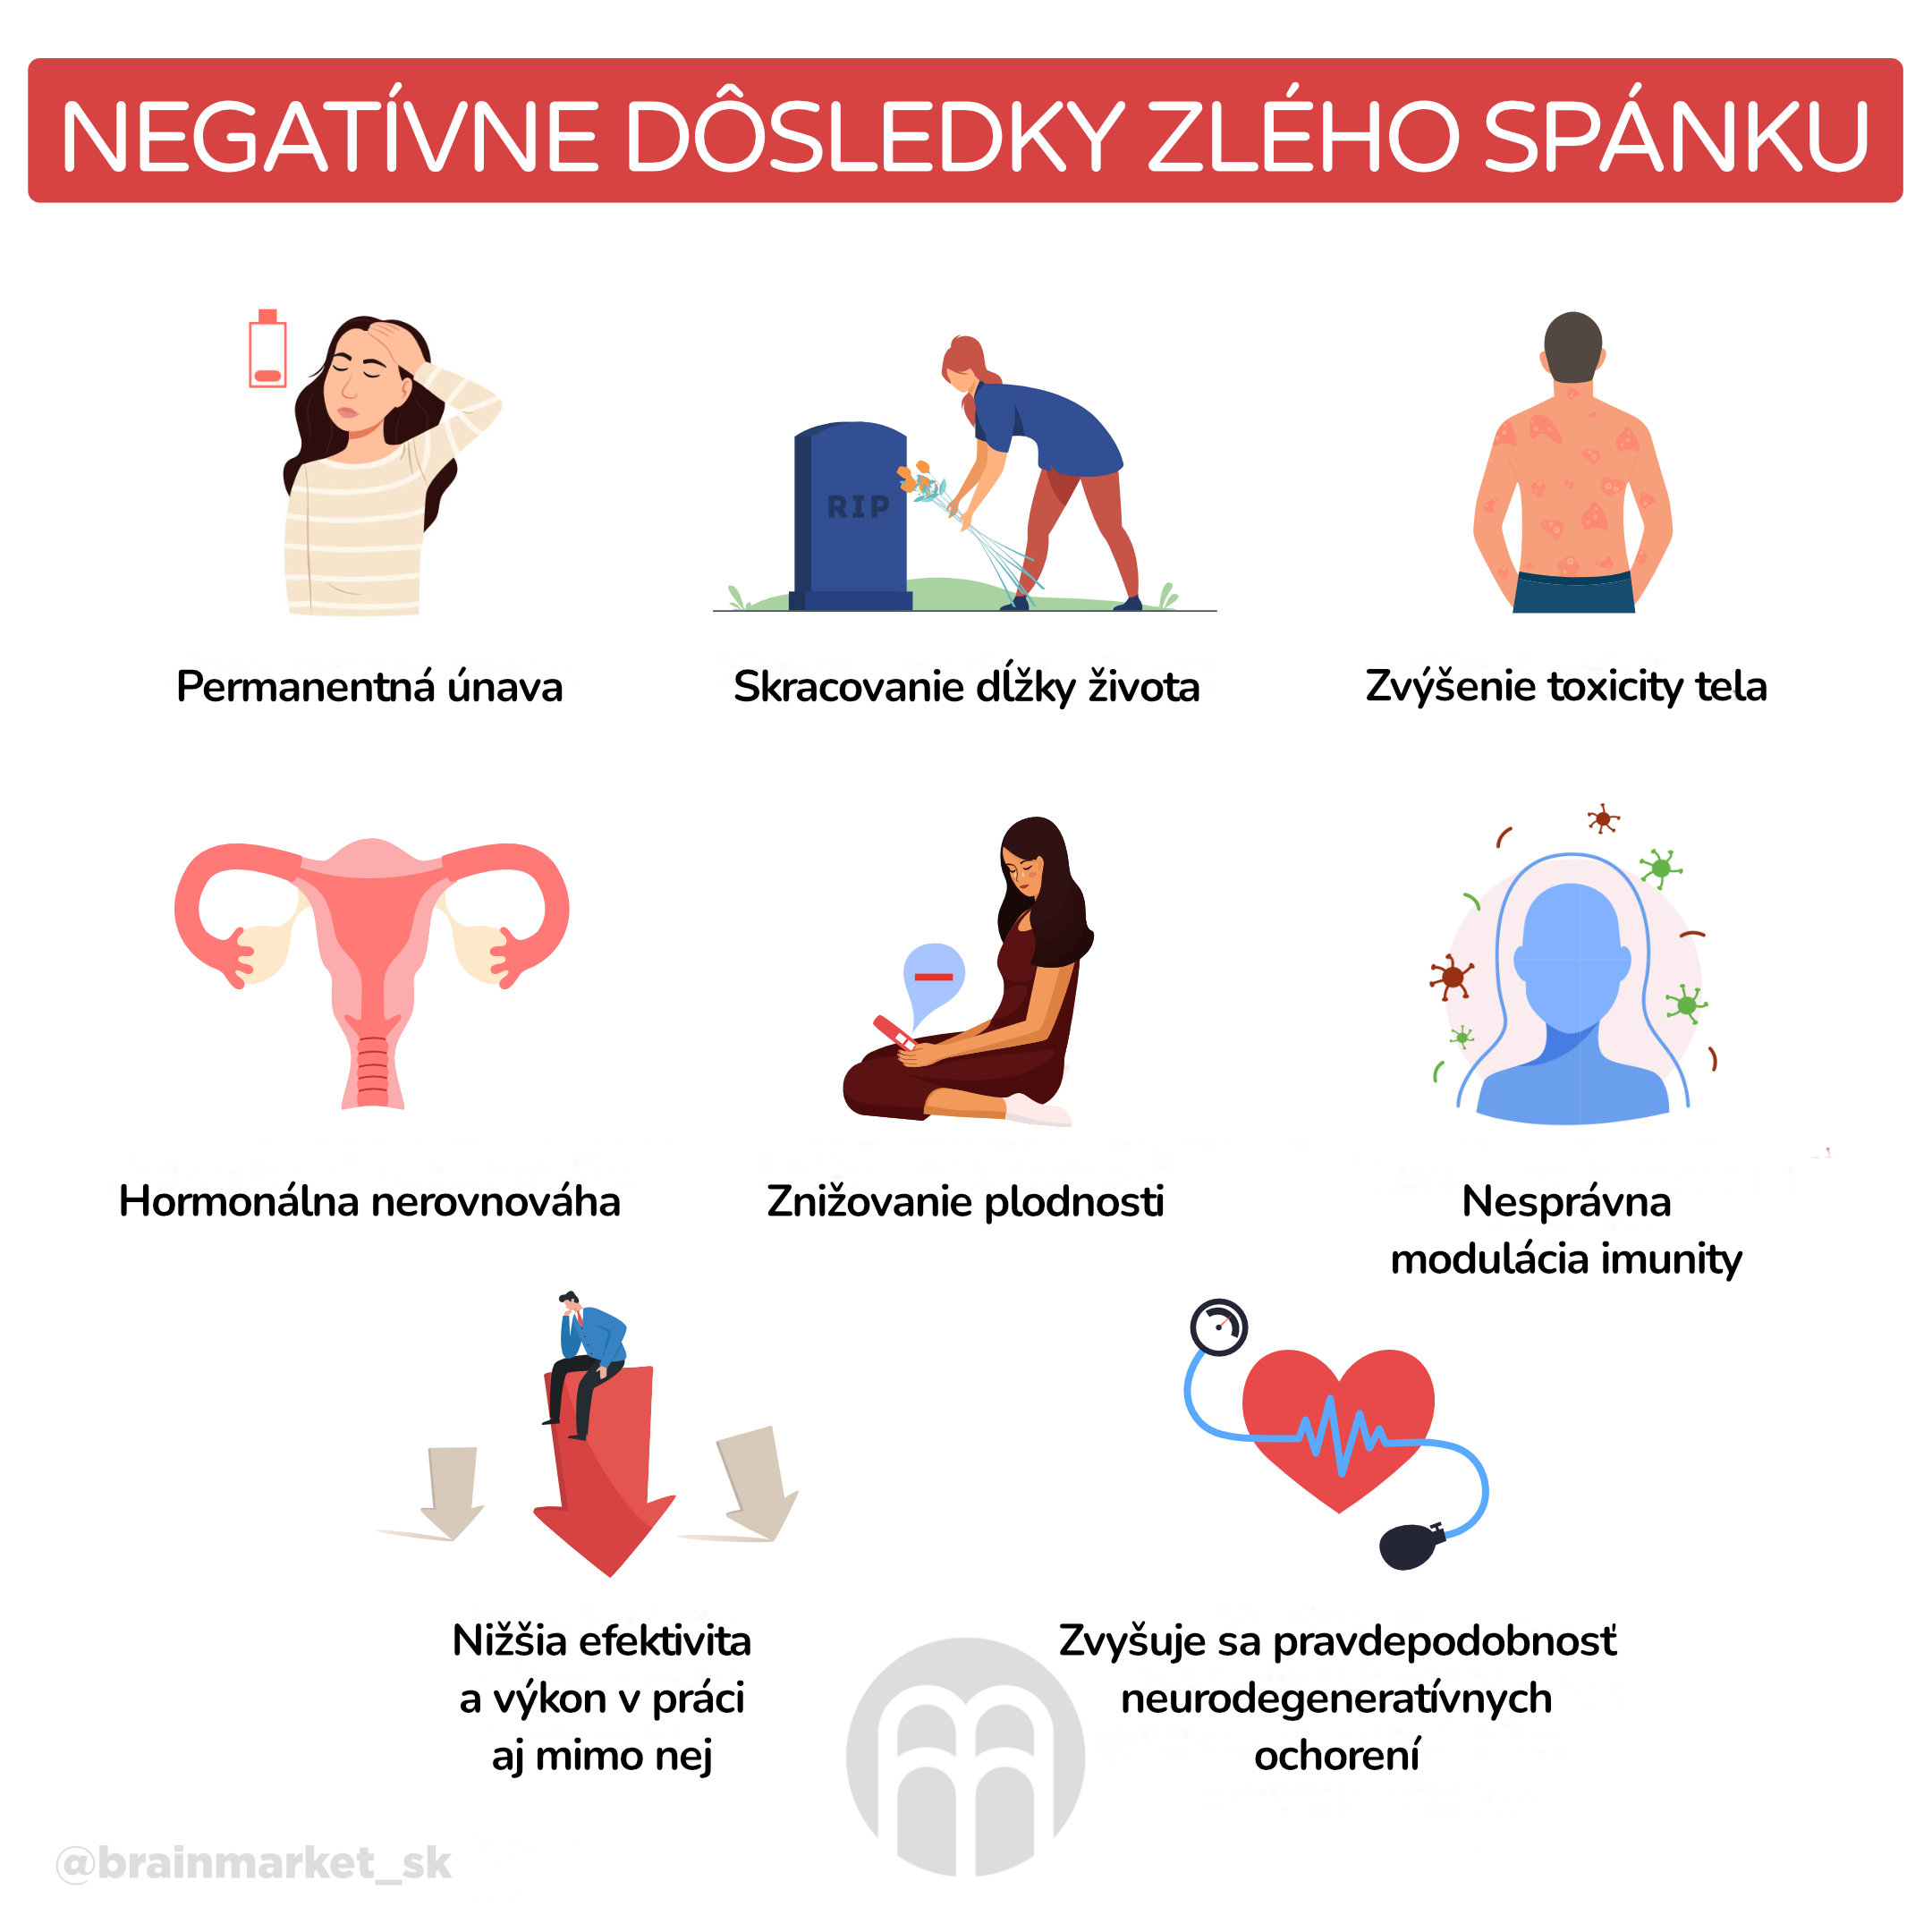 negativni dusledky spatneho spanku_infografika_cz